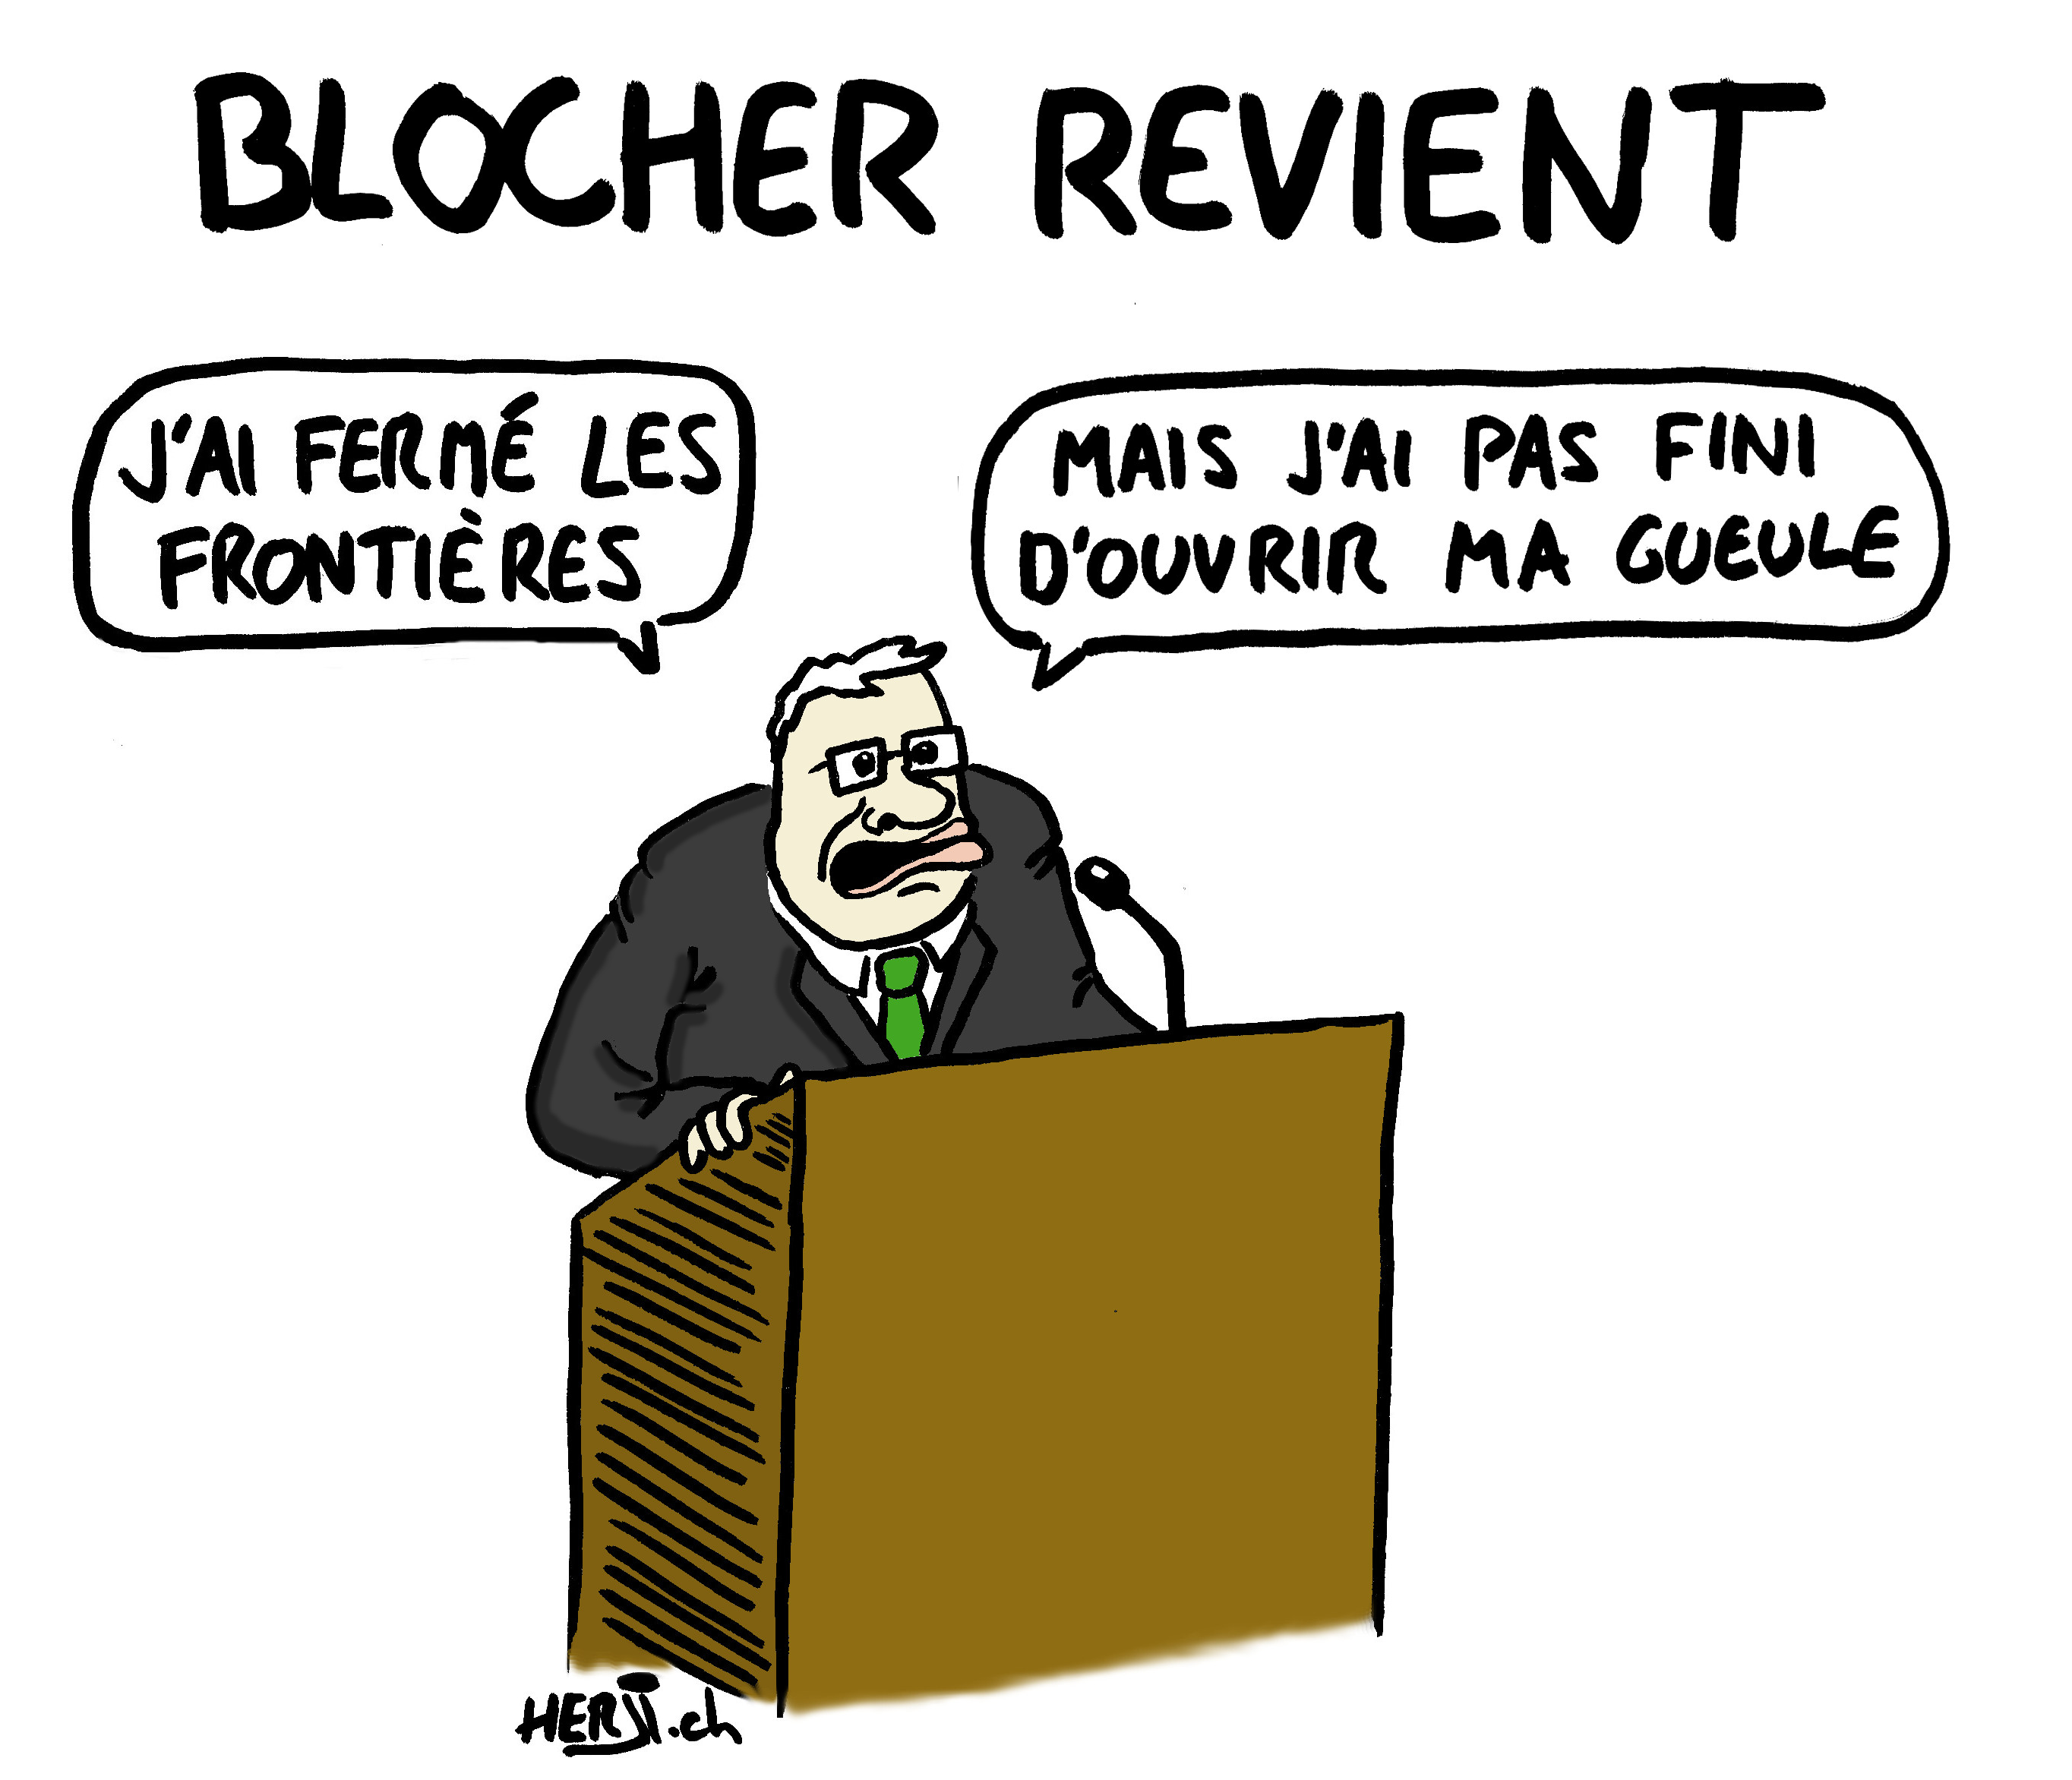 Blocher revient